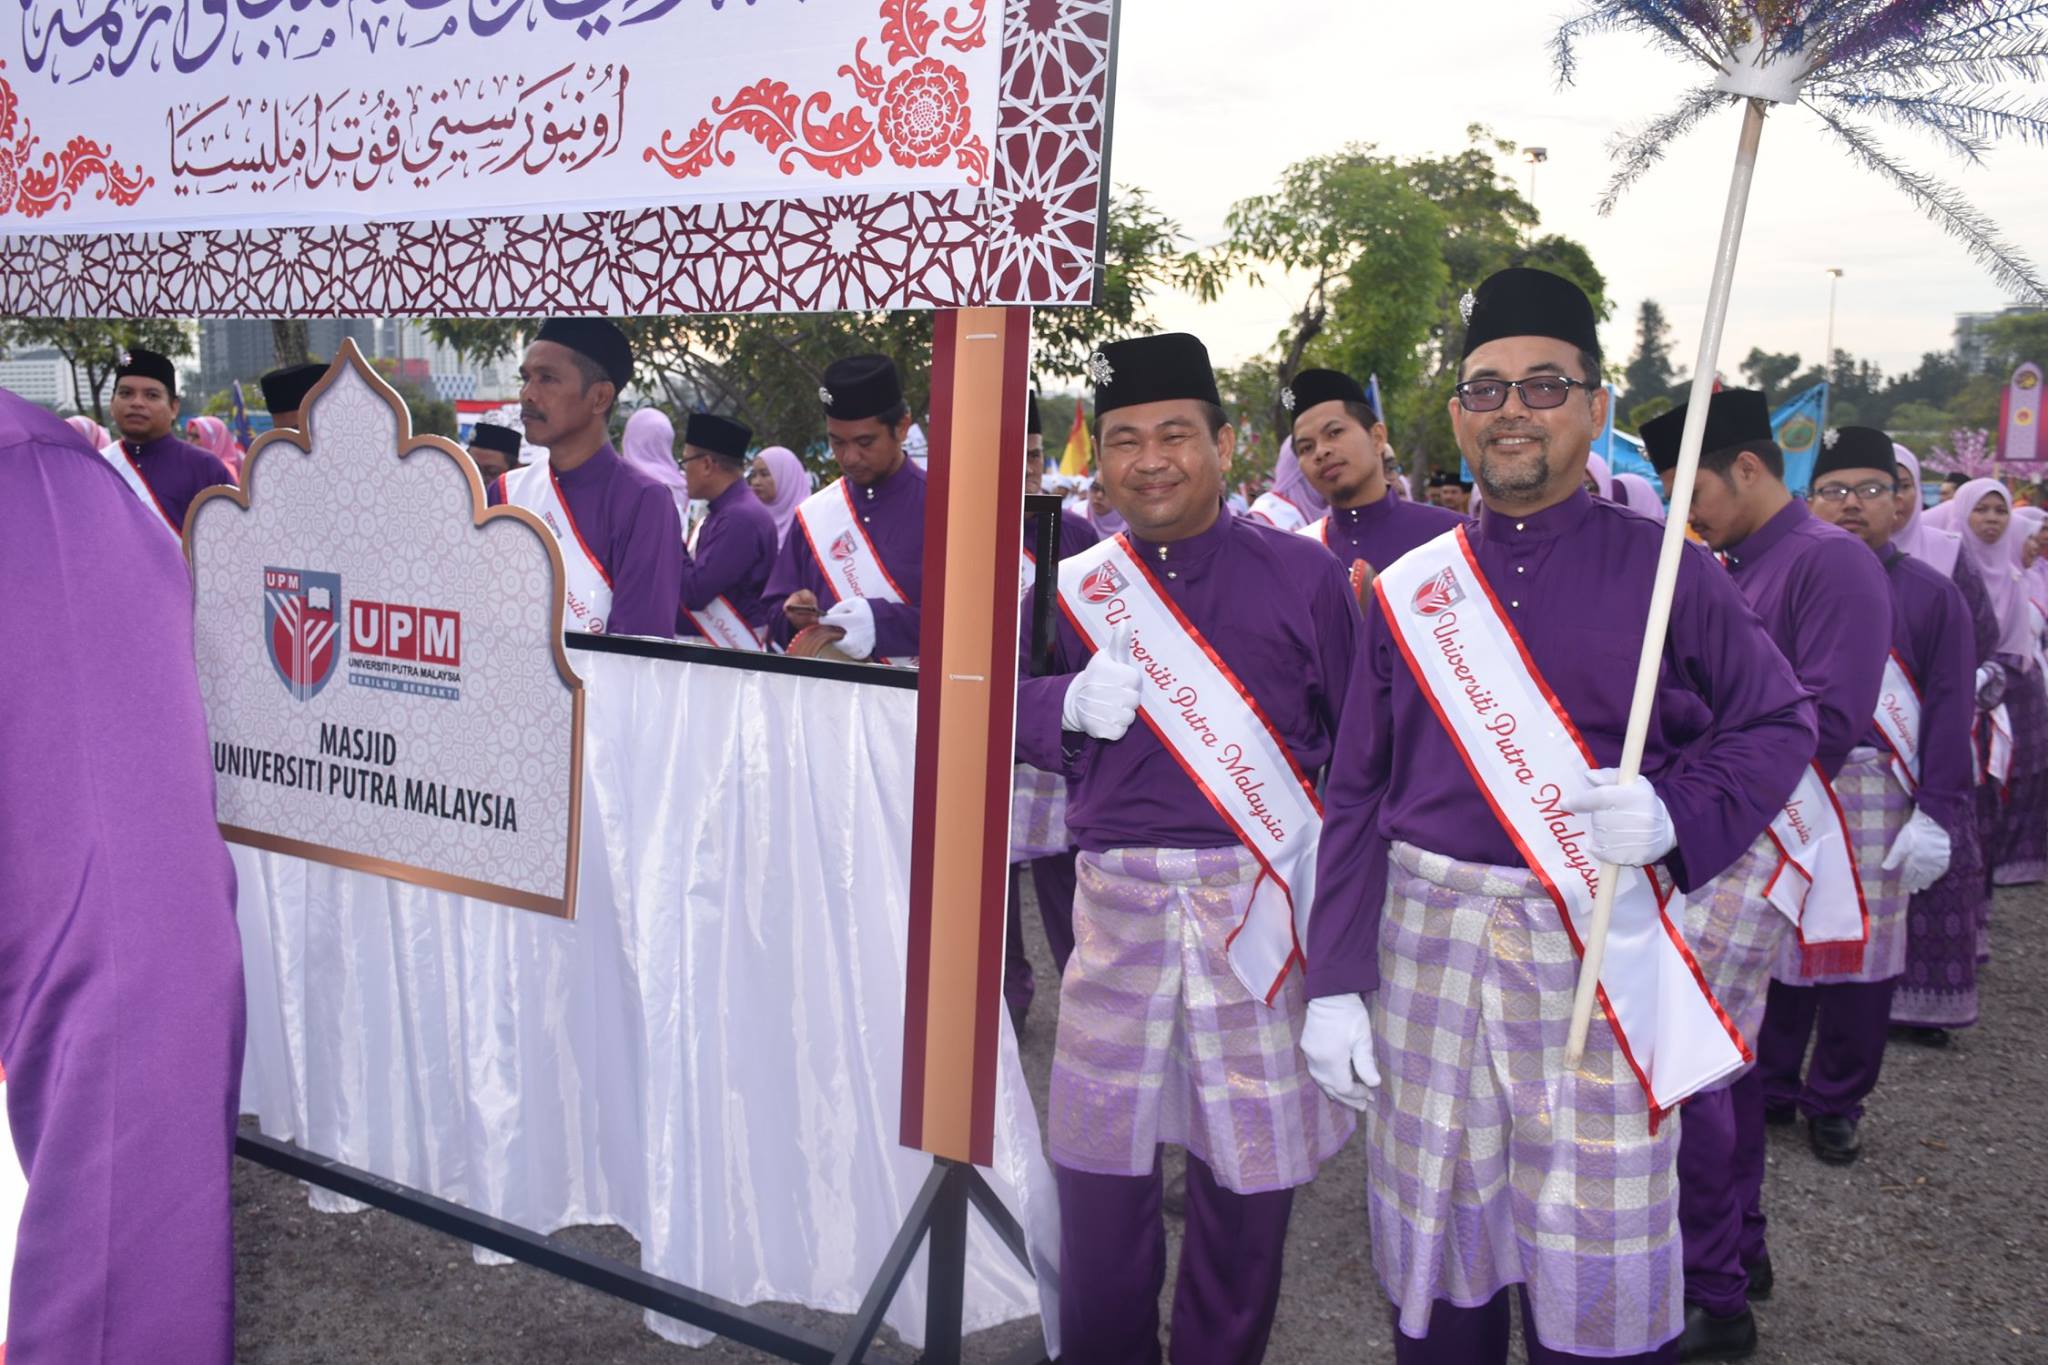 Sepanduk Maulidur Rasul 2019 - This was the first time the celebration